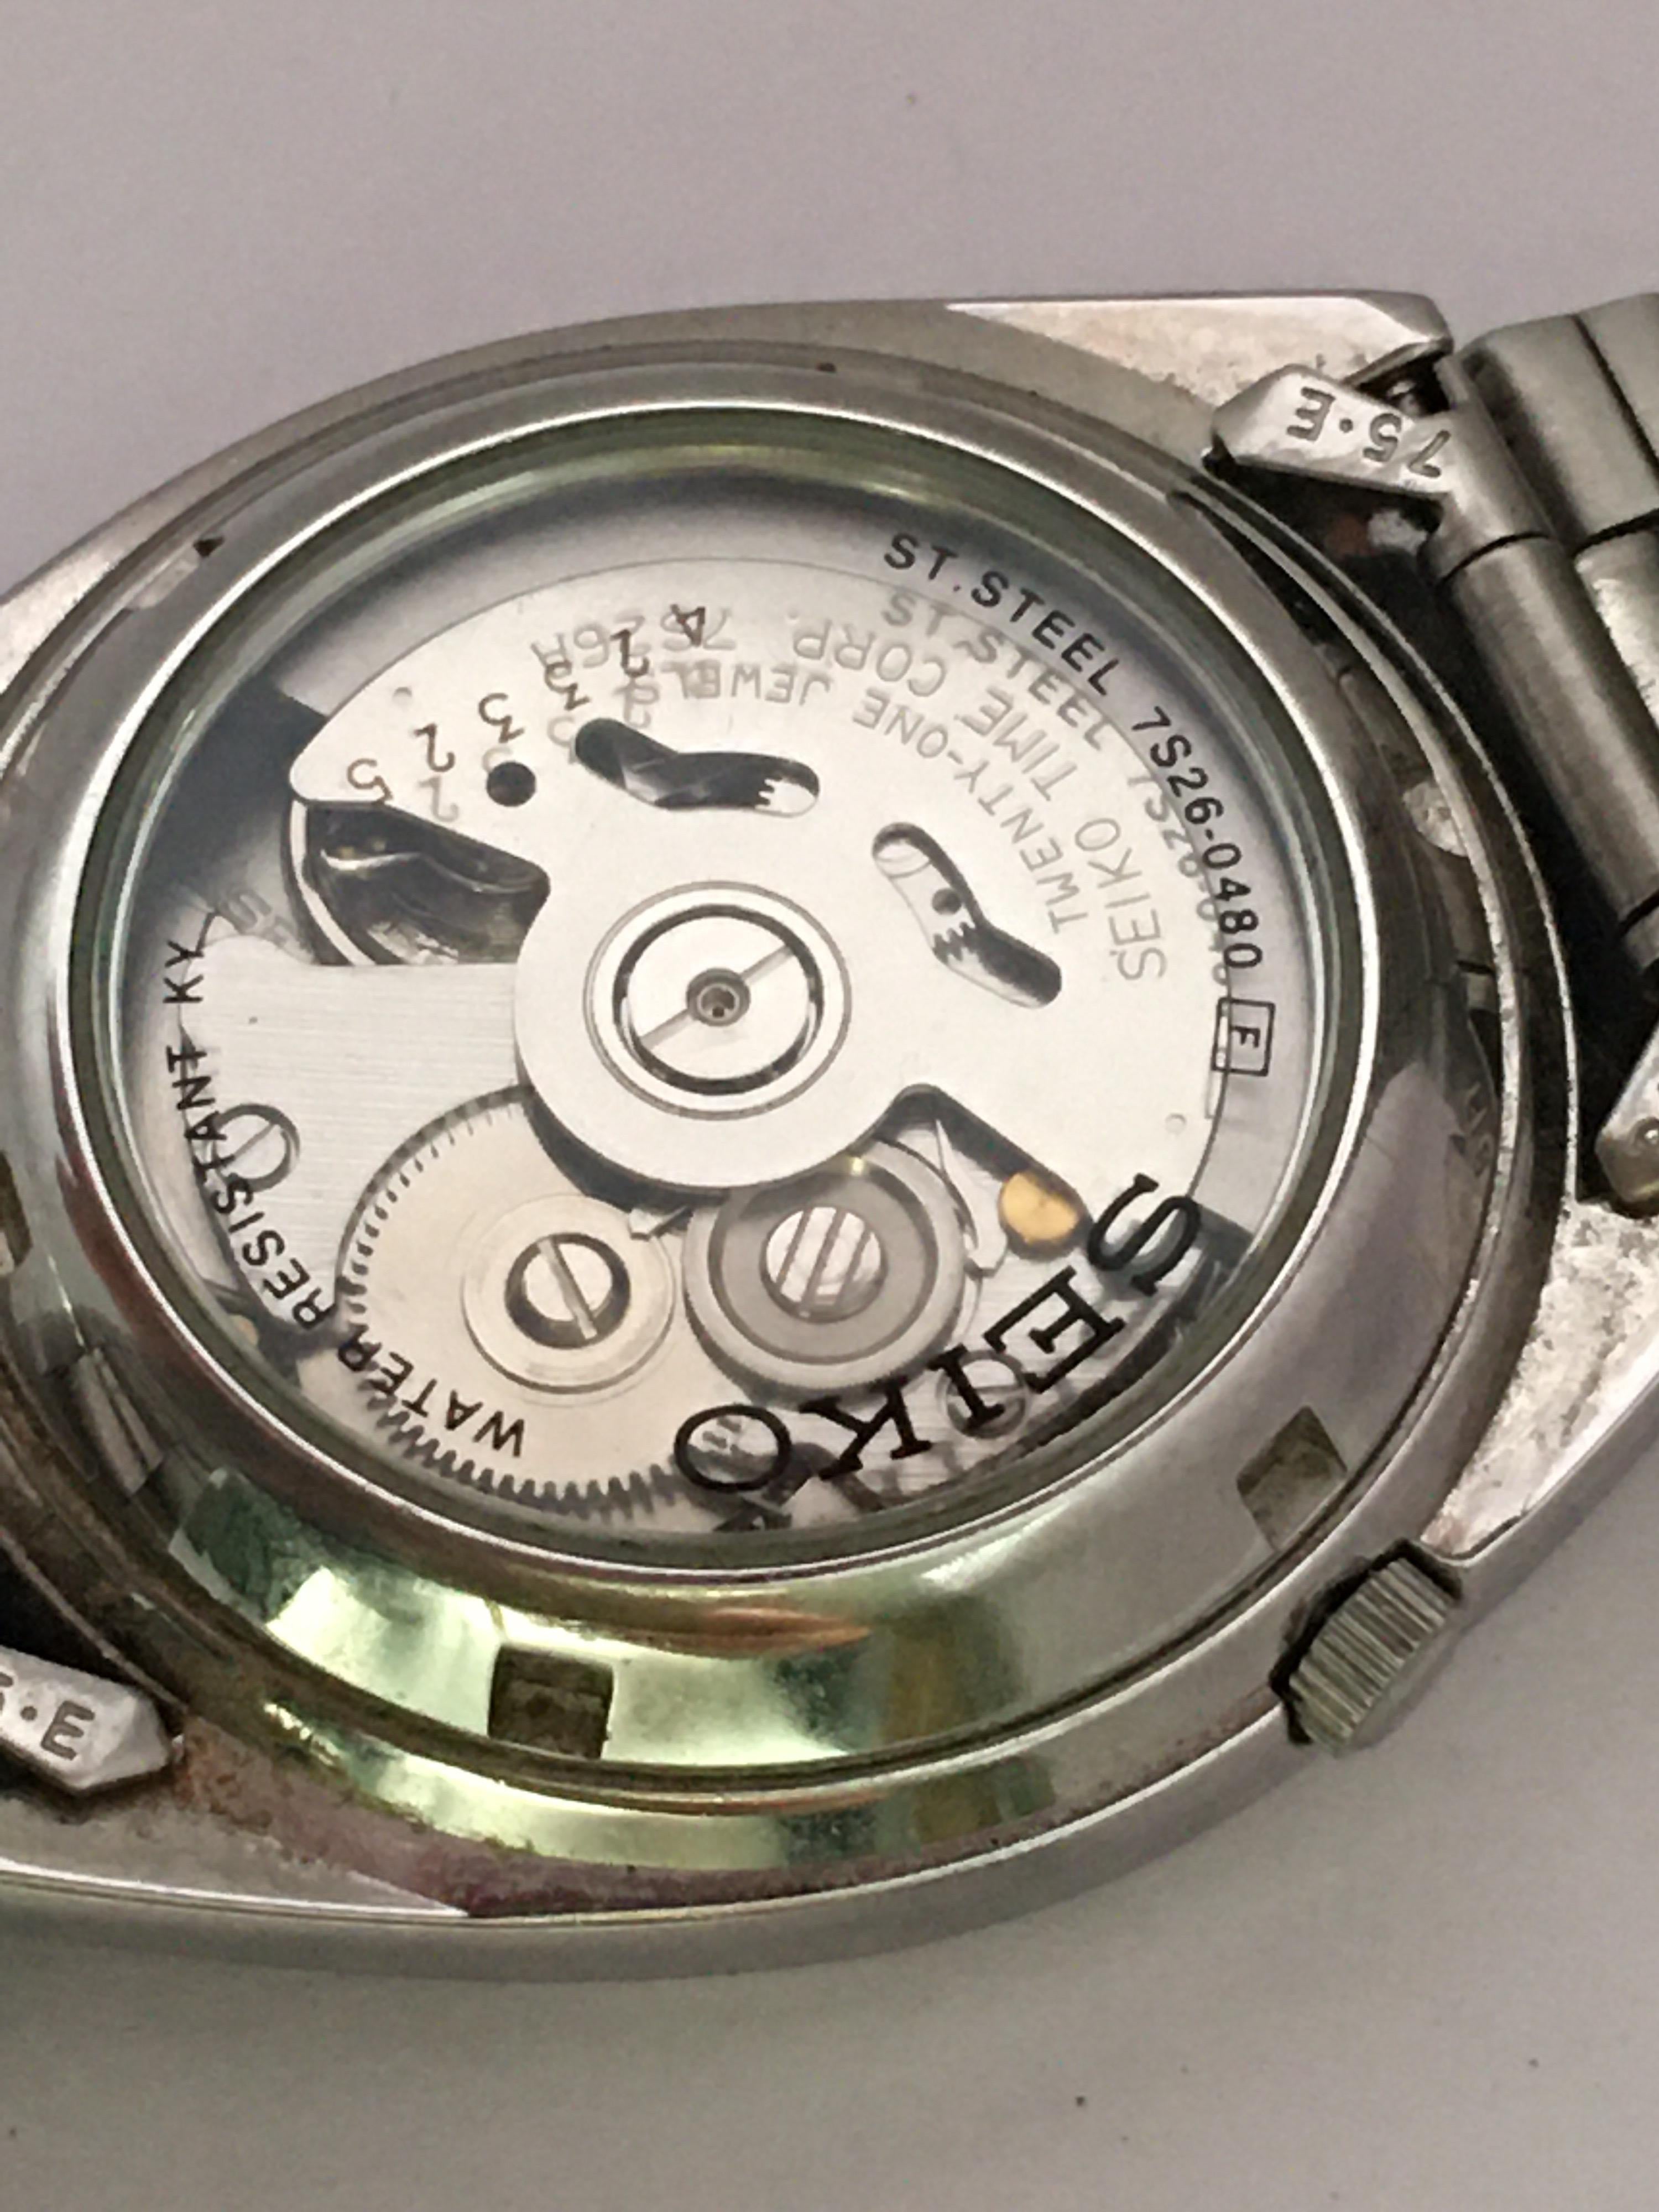 Stainless Steel Seiko 5 Automatic Gentlemen's Watch 3